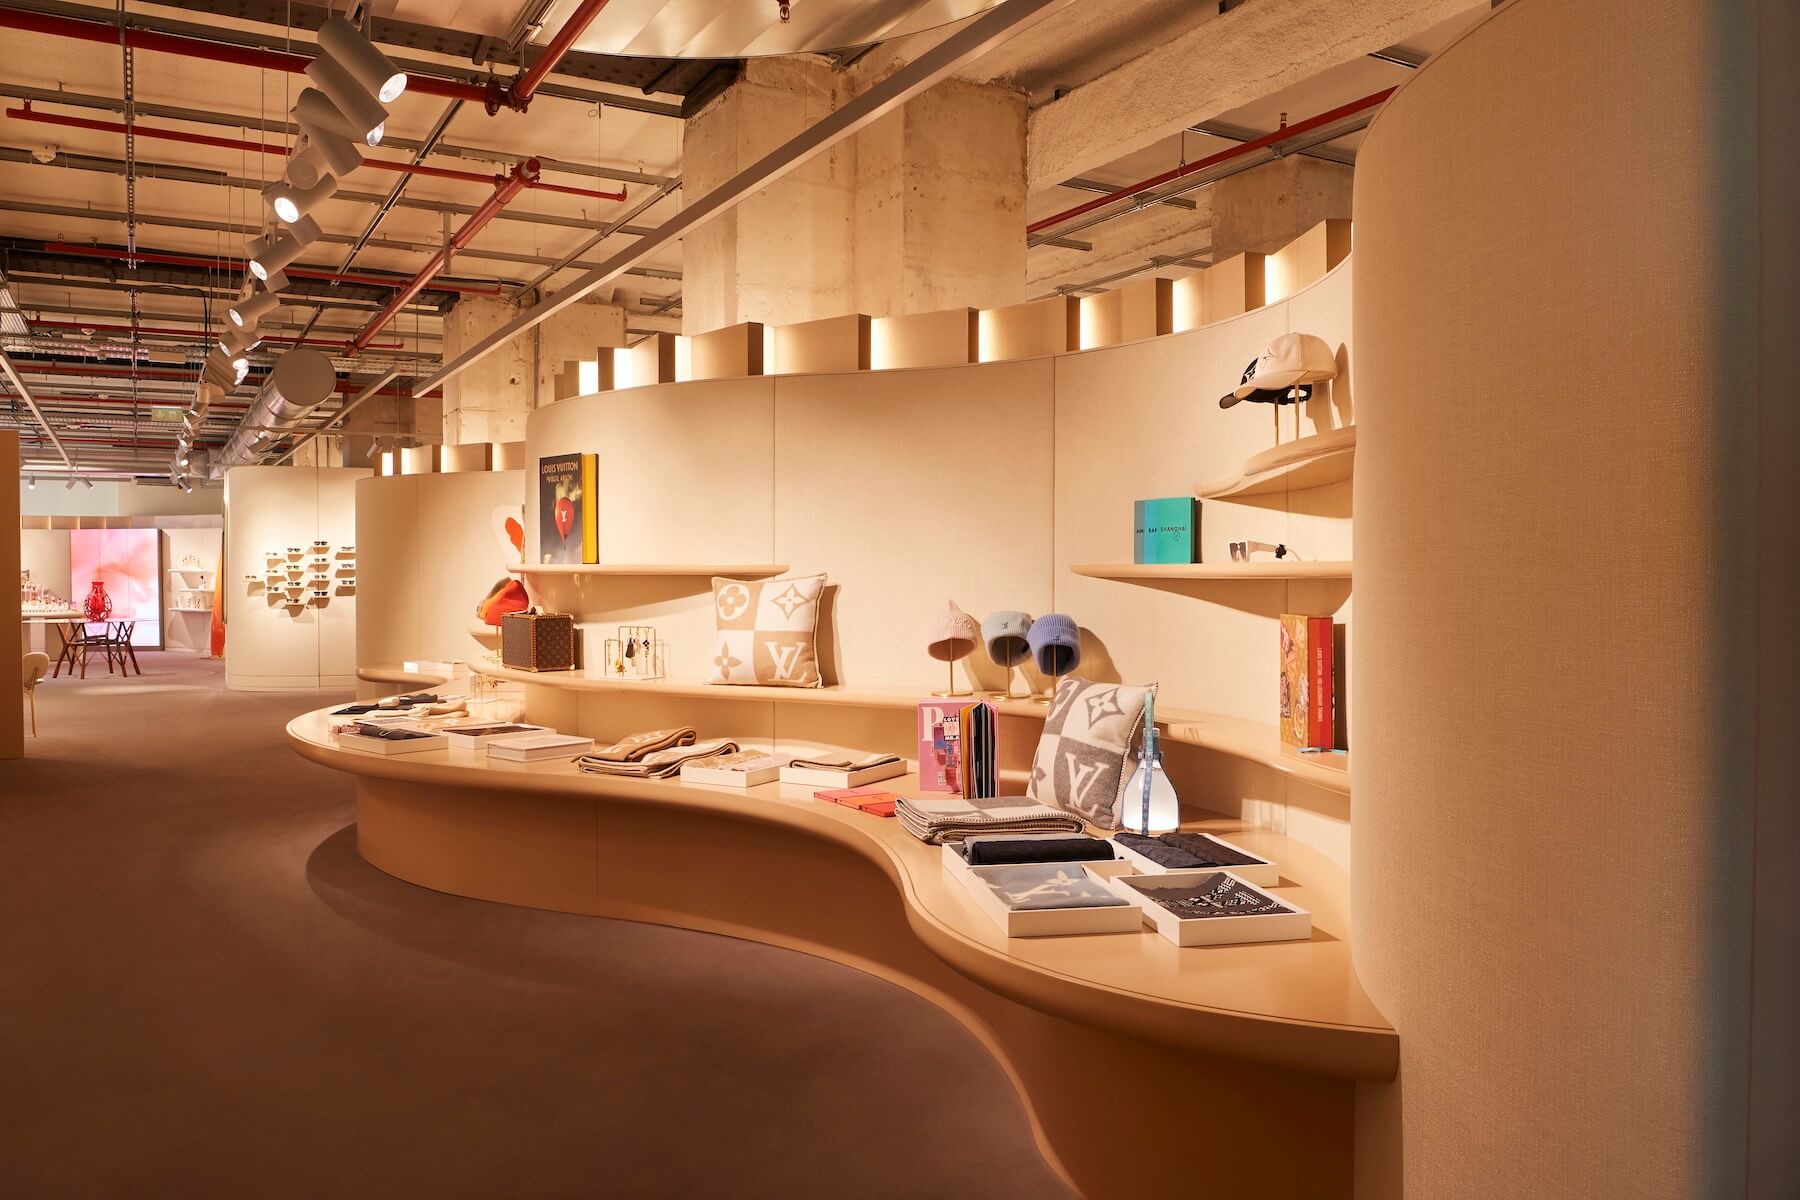 Ten's To Do: Explore Louis Vuitton's LV Dream Exhibition, Café and  Chocolaterie - 10 Magazine